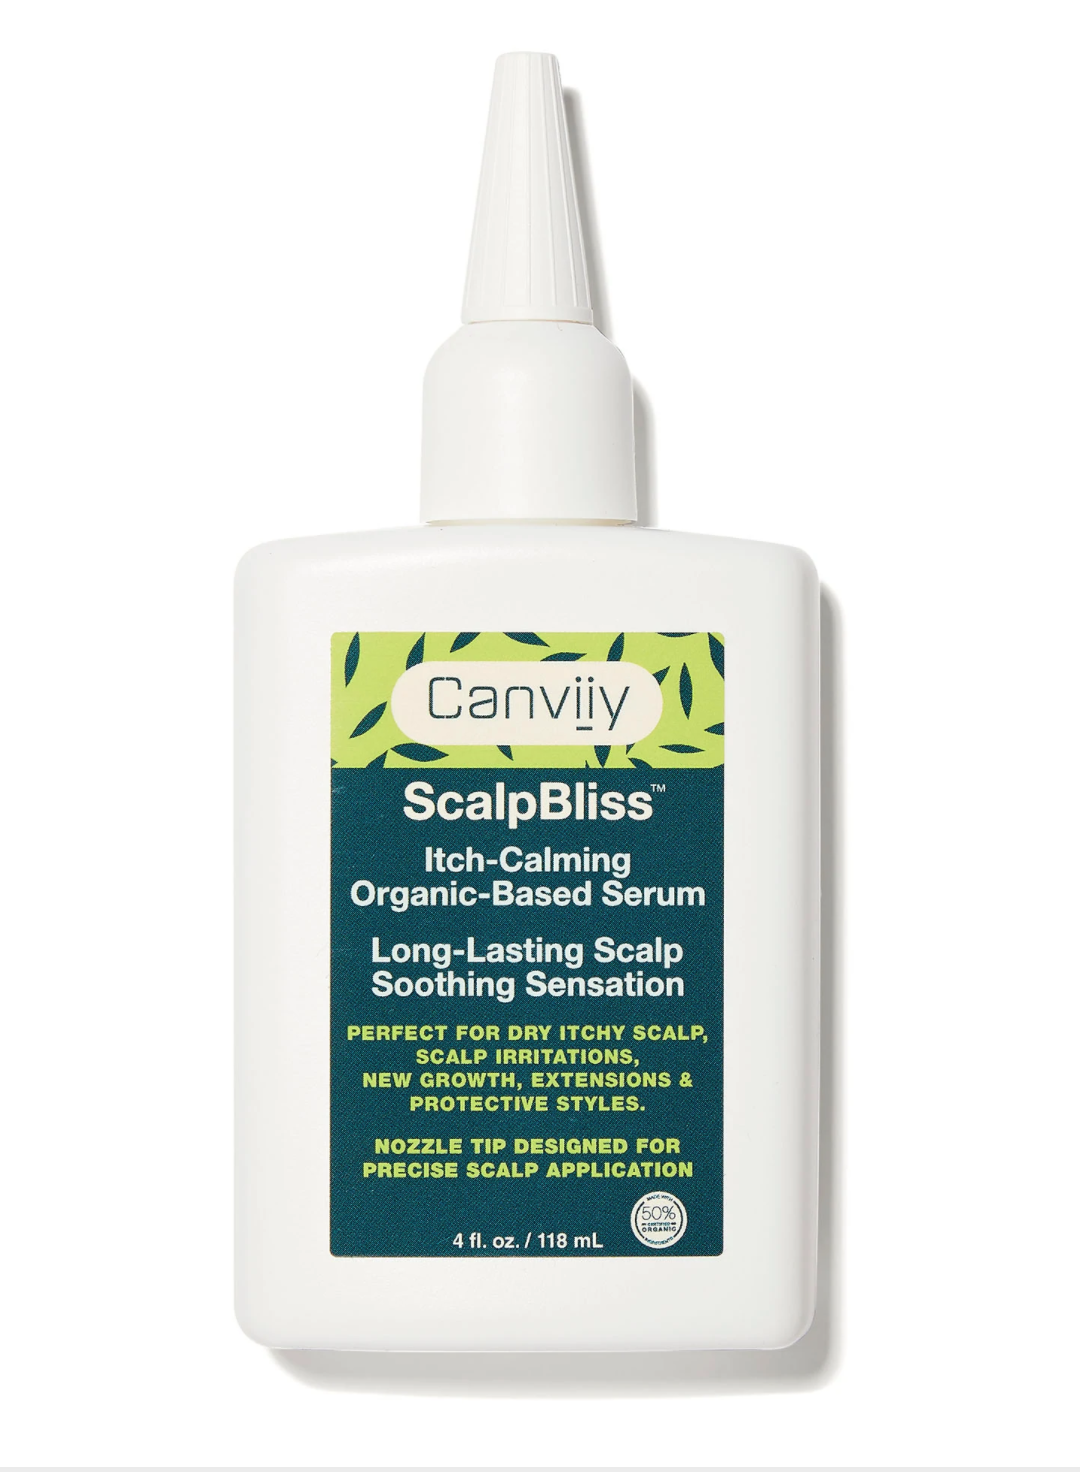 Canviiy ScalpBliss Itch-Calming Organic-Based Serum